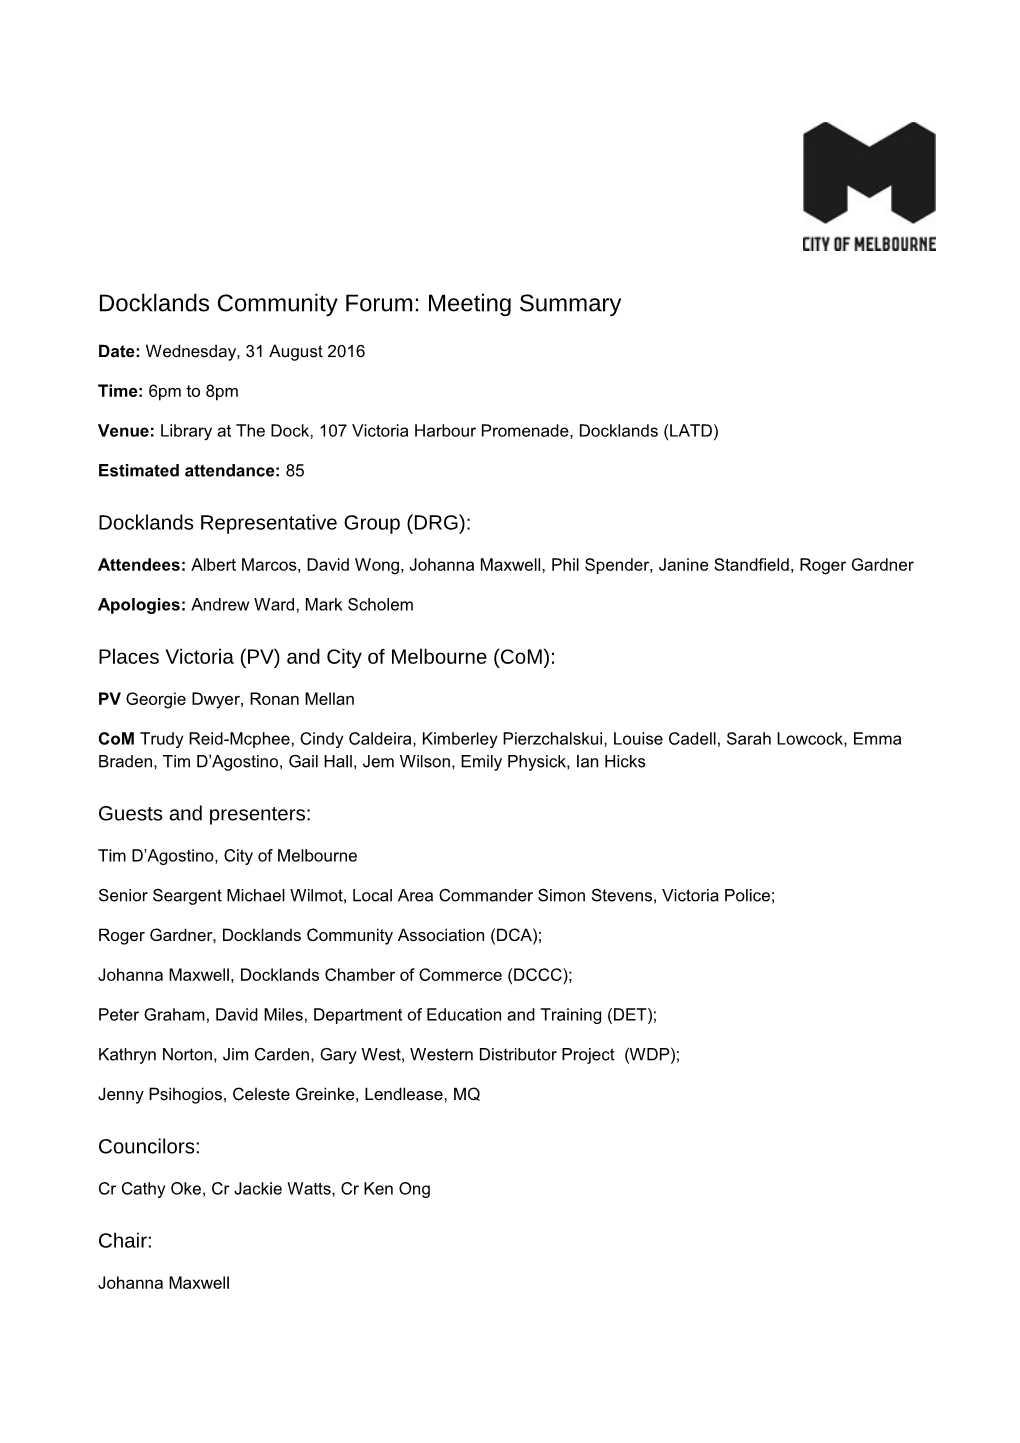 Docklands Community Forum: Meeting Summary 31 August 2016